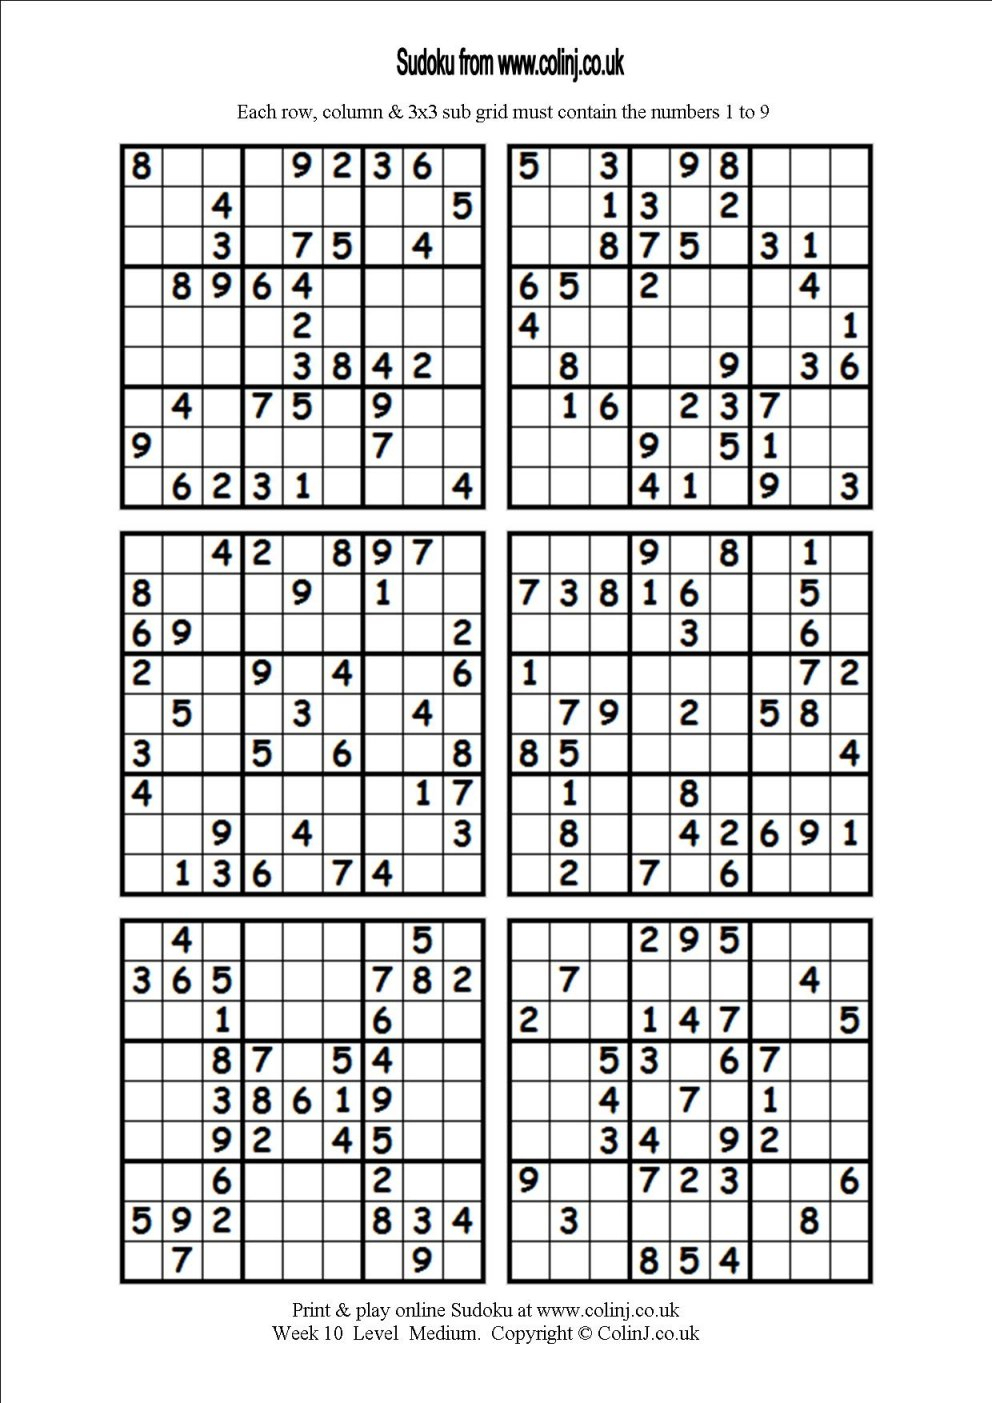 Sudoku Printables Pdf 6 Per Page